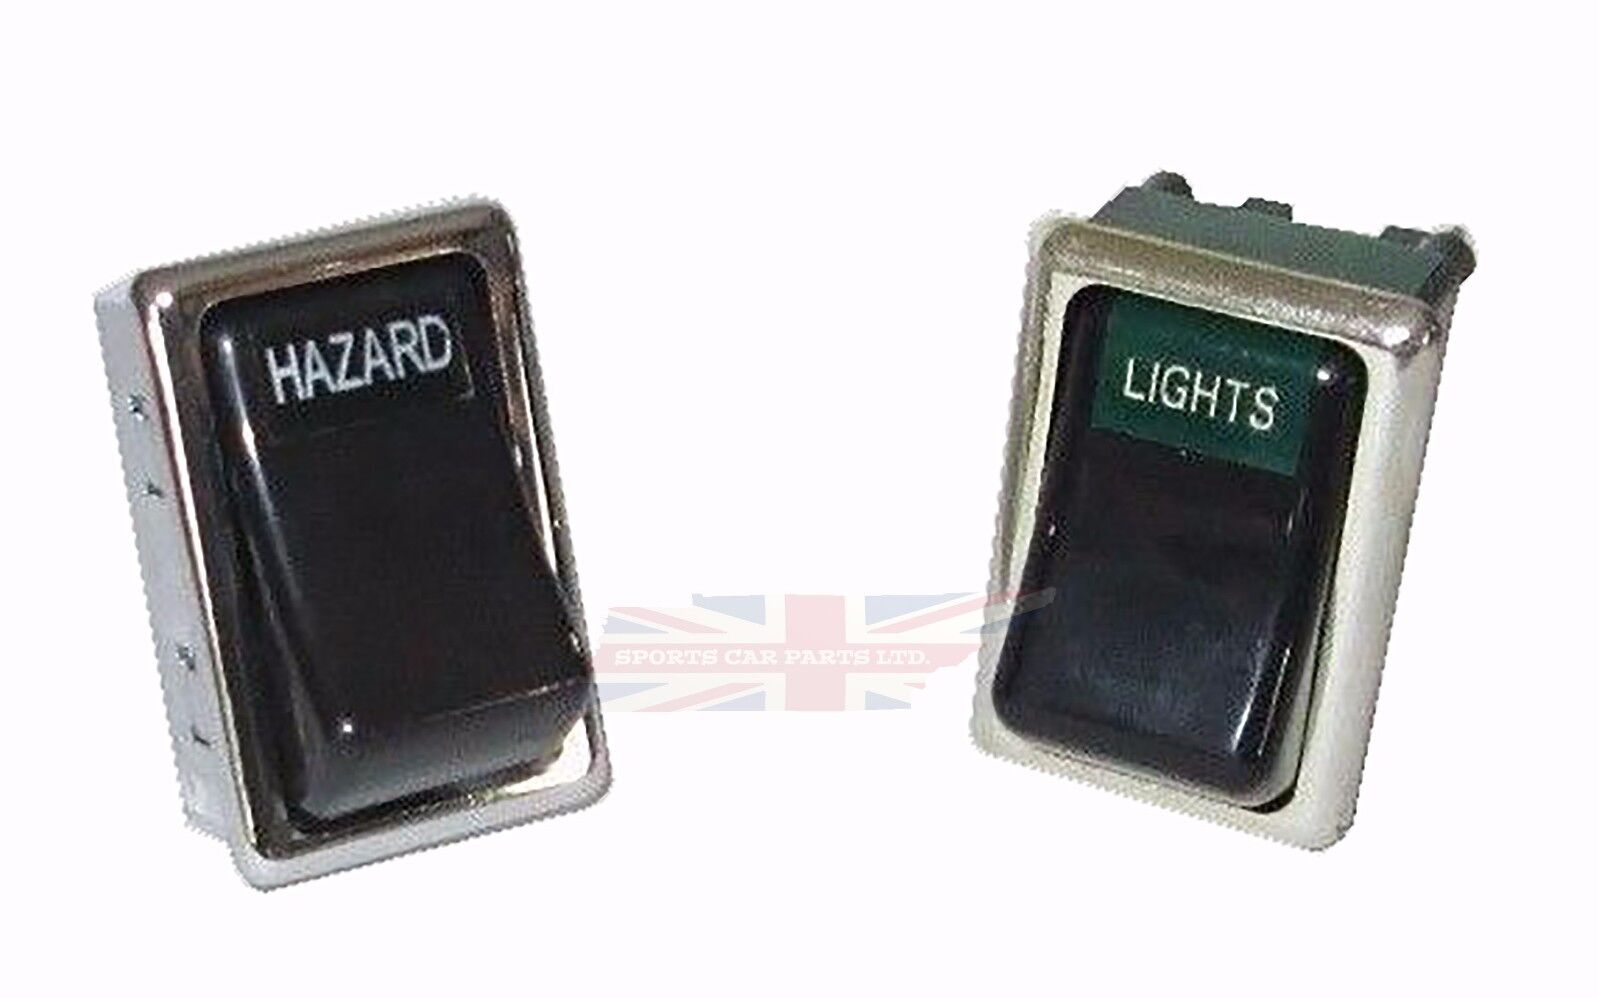 New Head Light Headlight + Hazard Switch for 1973-1976 MGB and 73-79 MG Midget